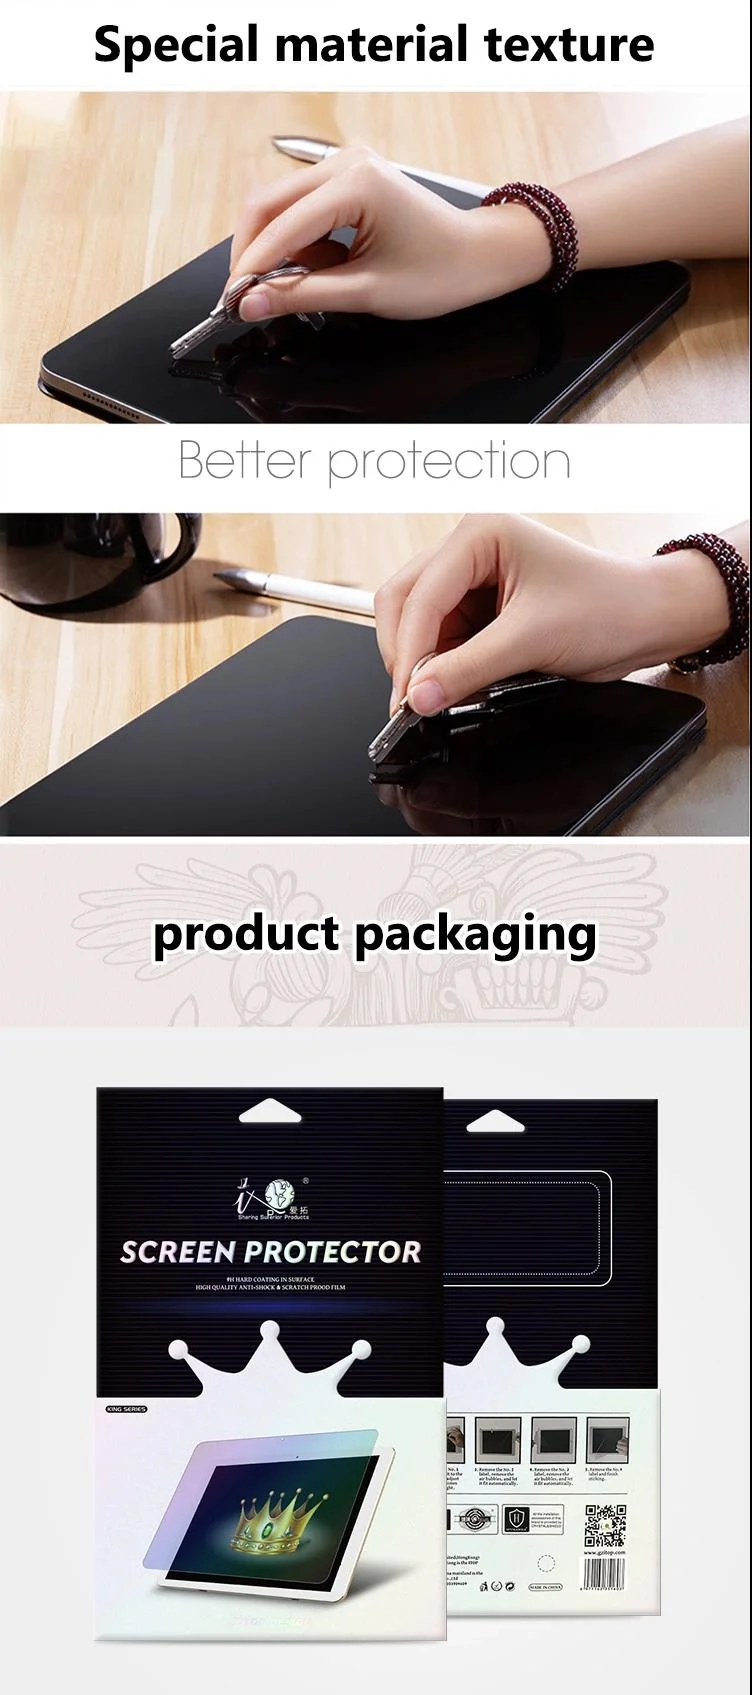 New Screen Protector Advanced Pet Matte Anti Glare Paper-Like Film for iPad New Size